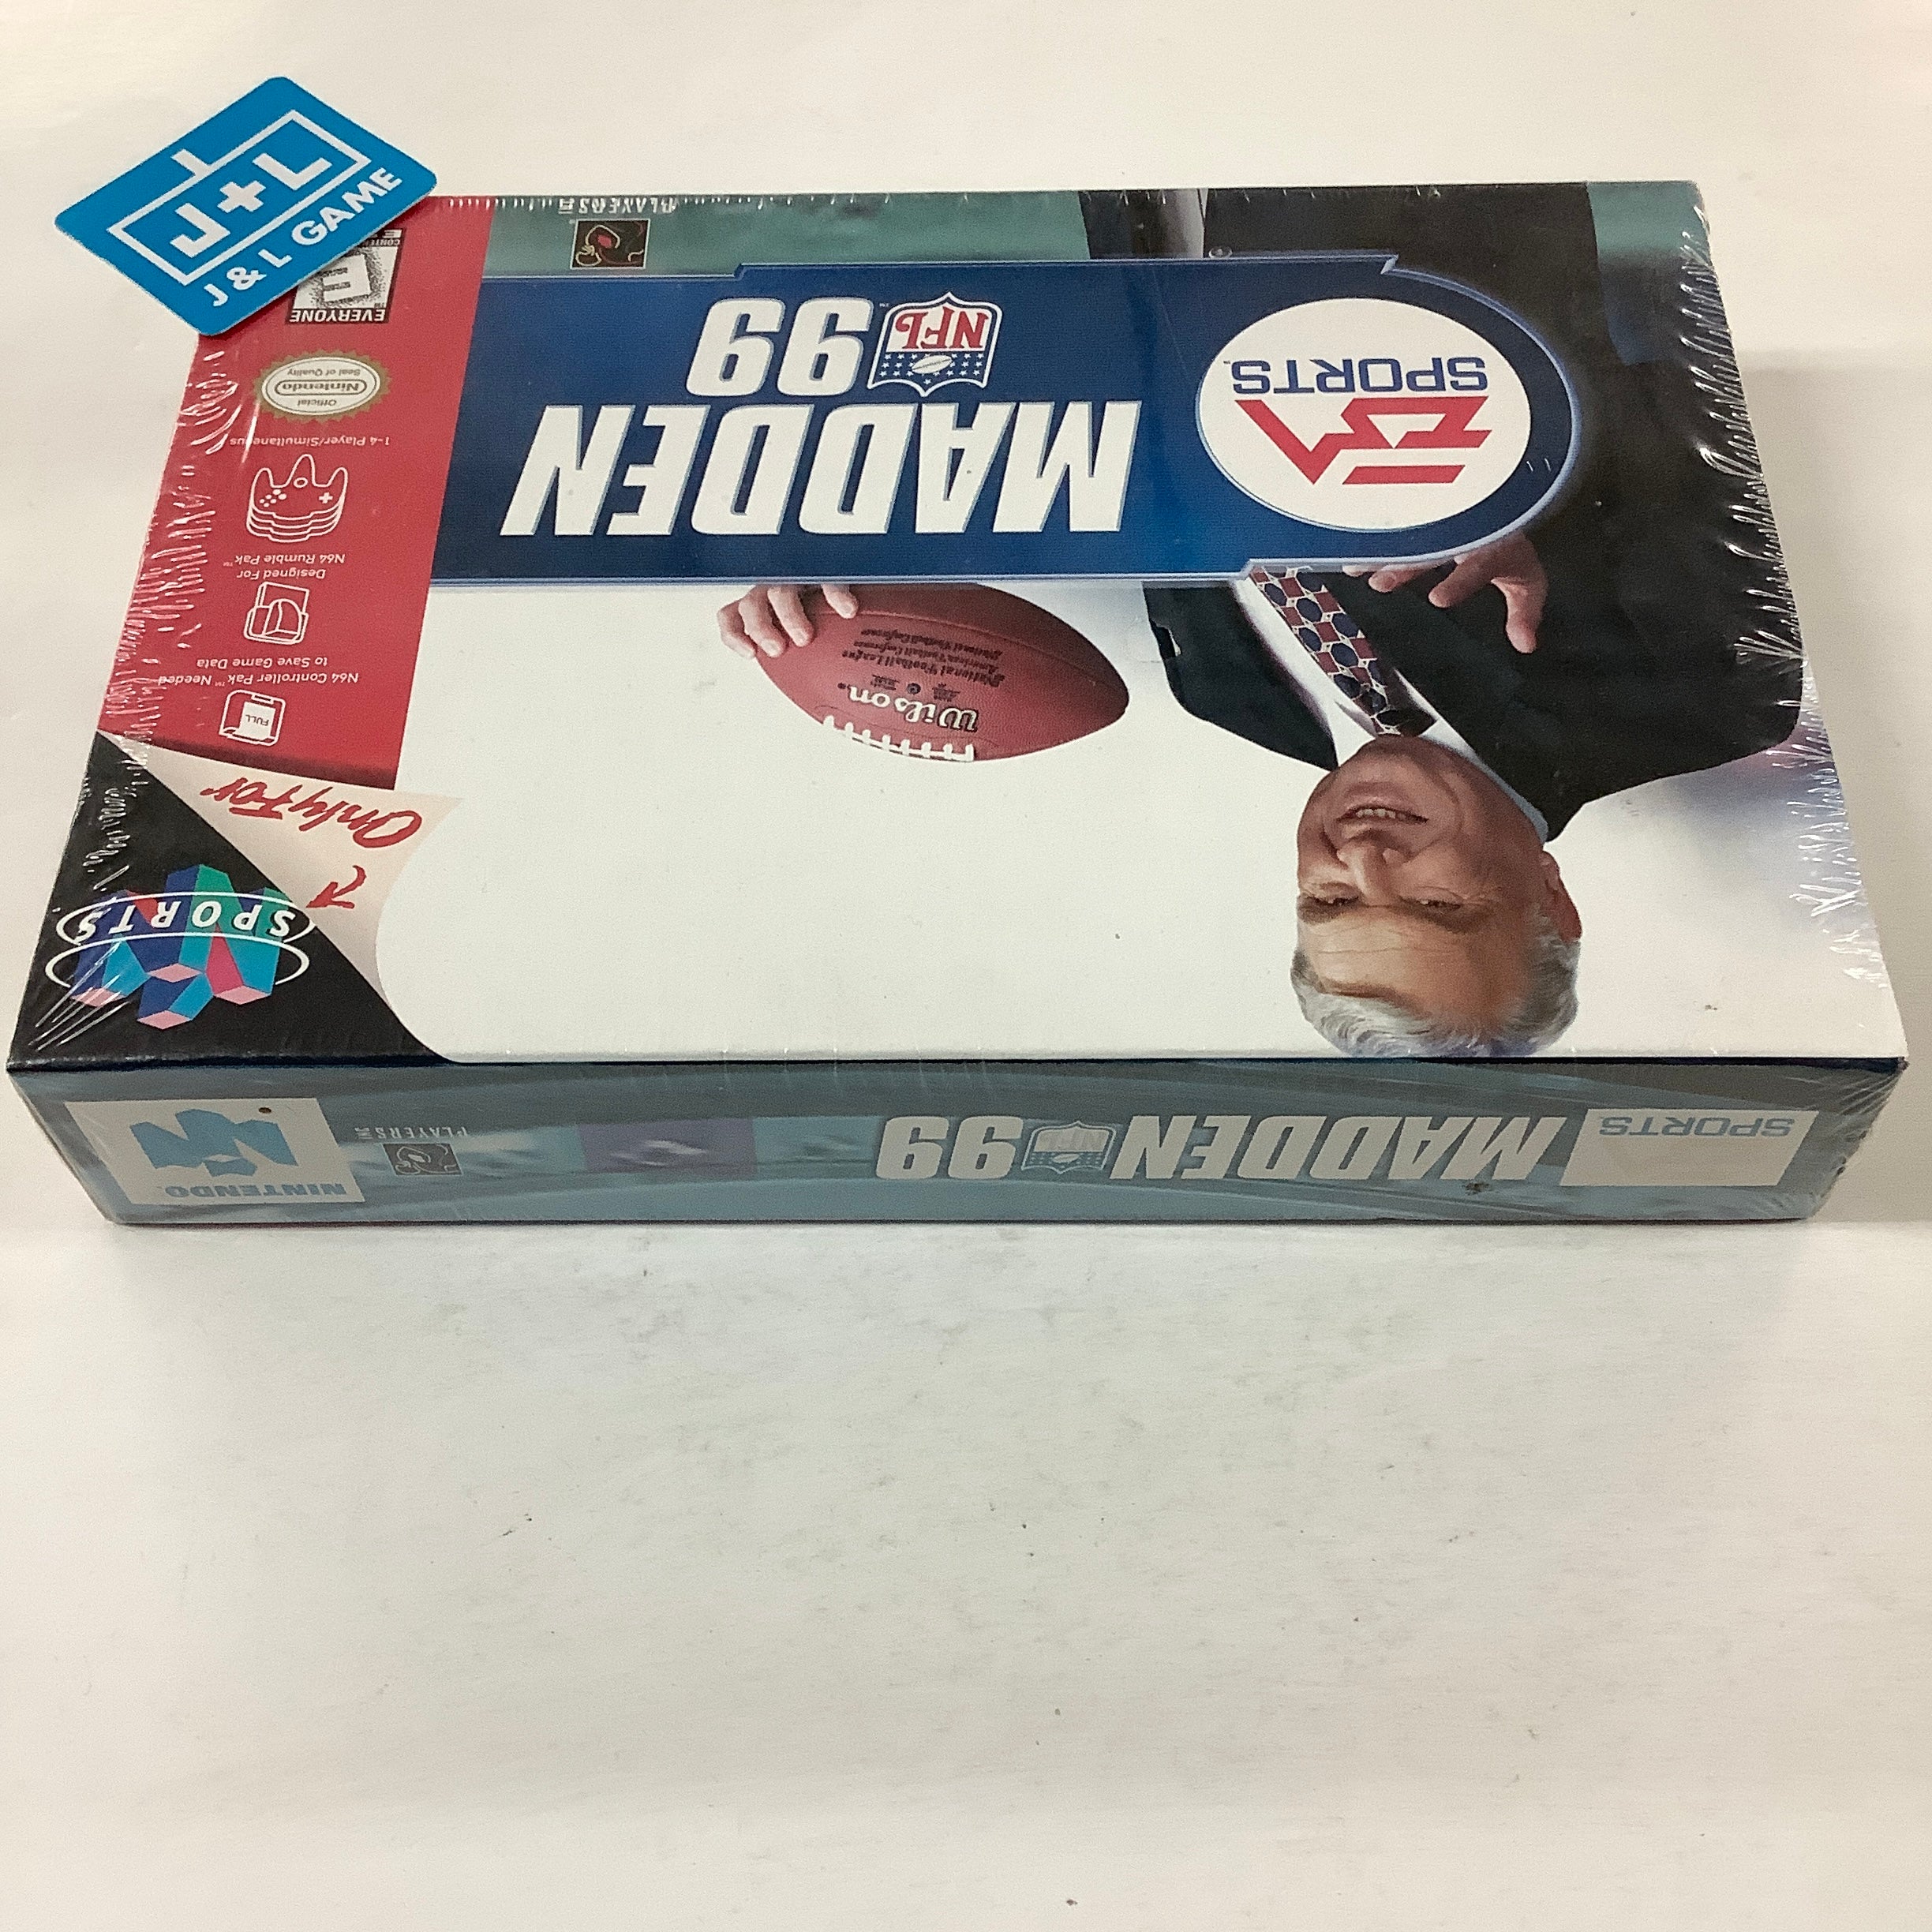 Madden NFL 99 - (N64) Nintendo 64 Video Games EA Sports   